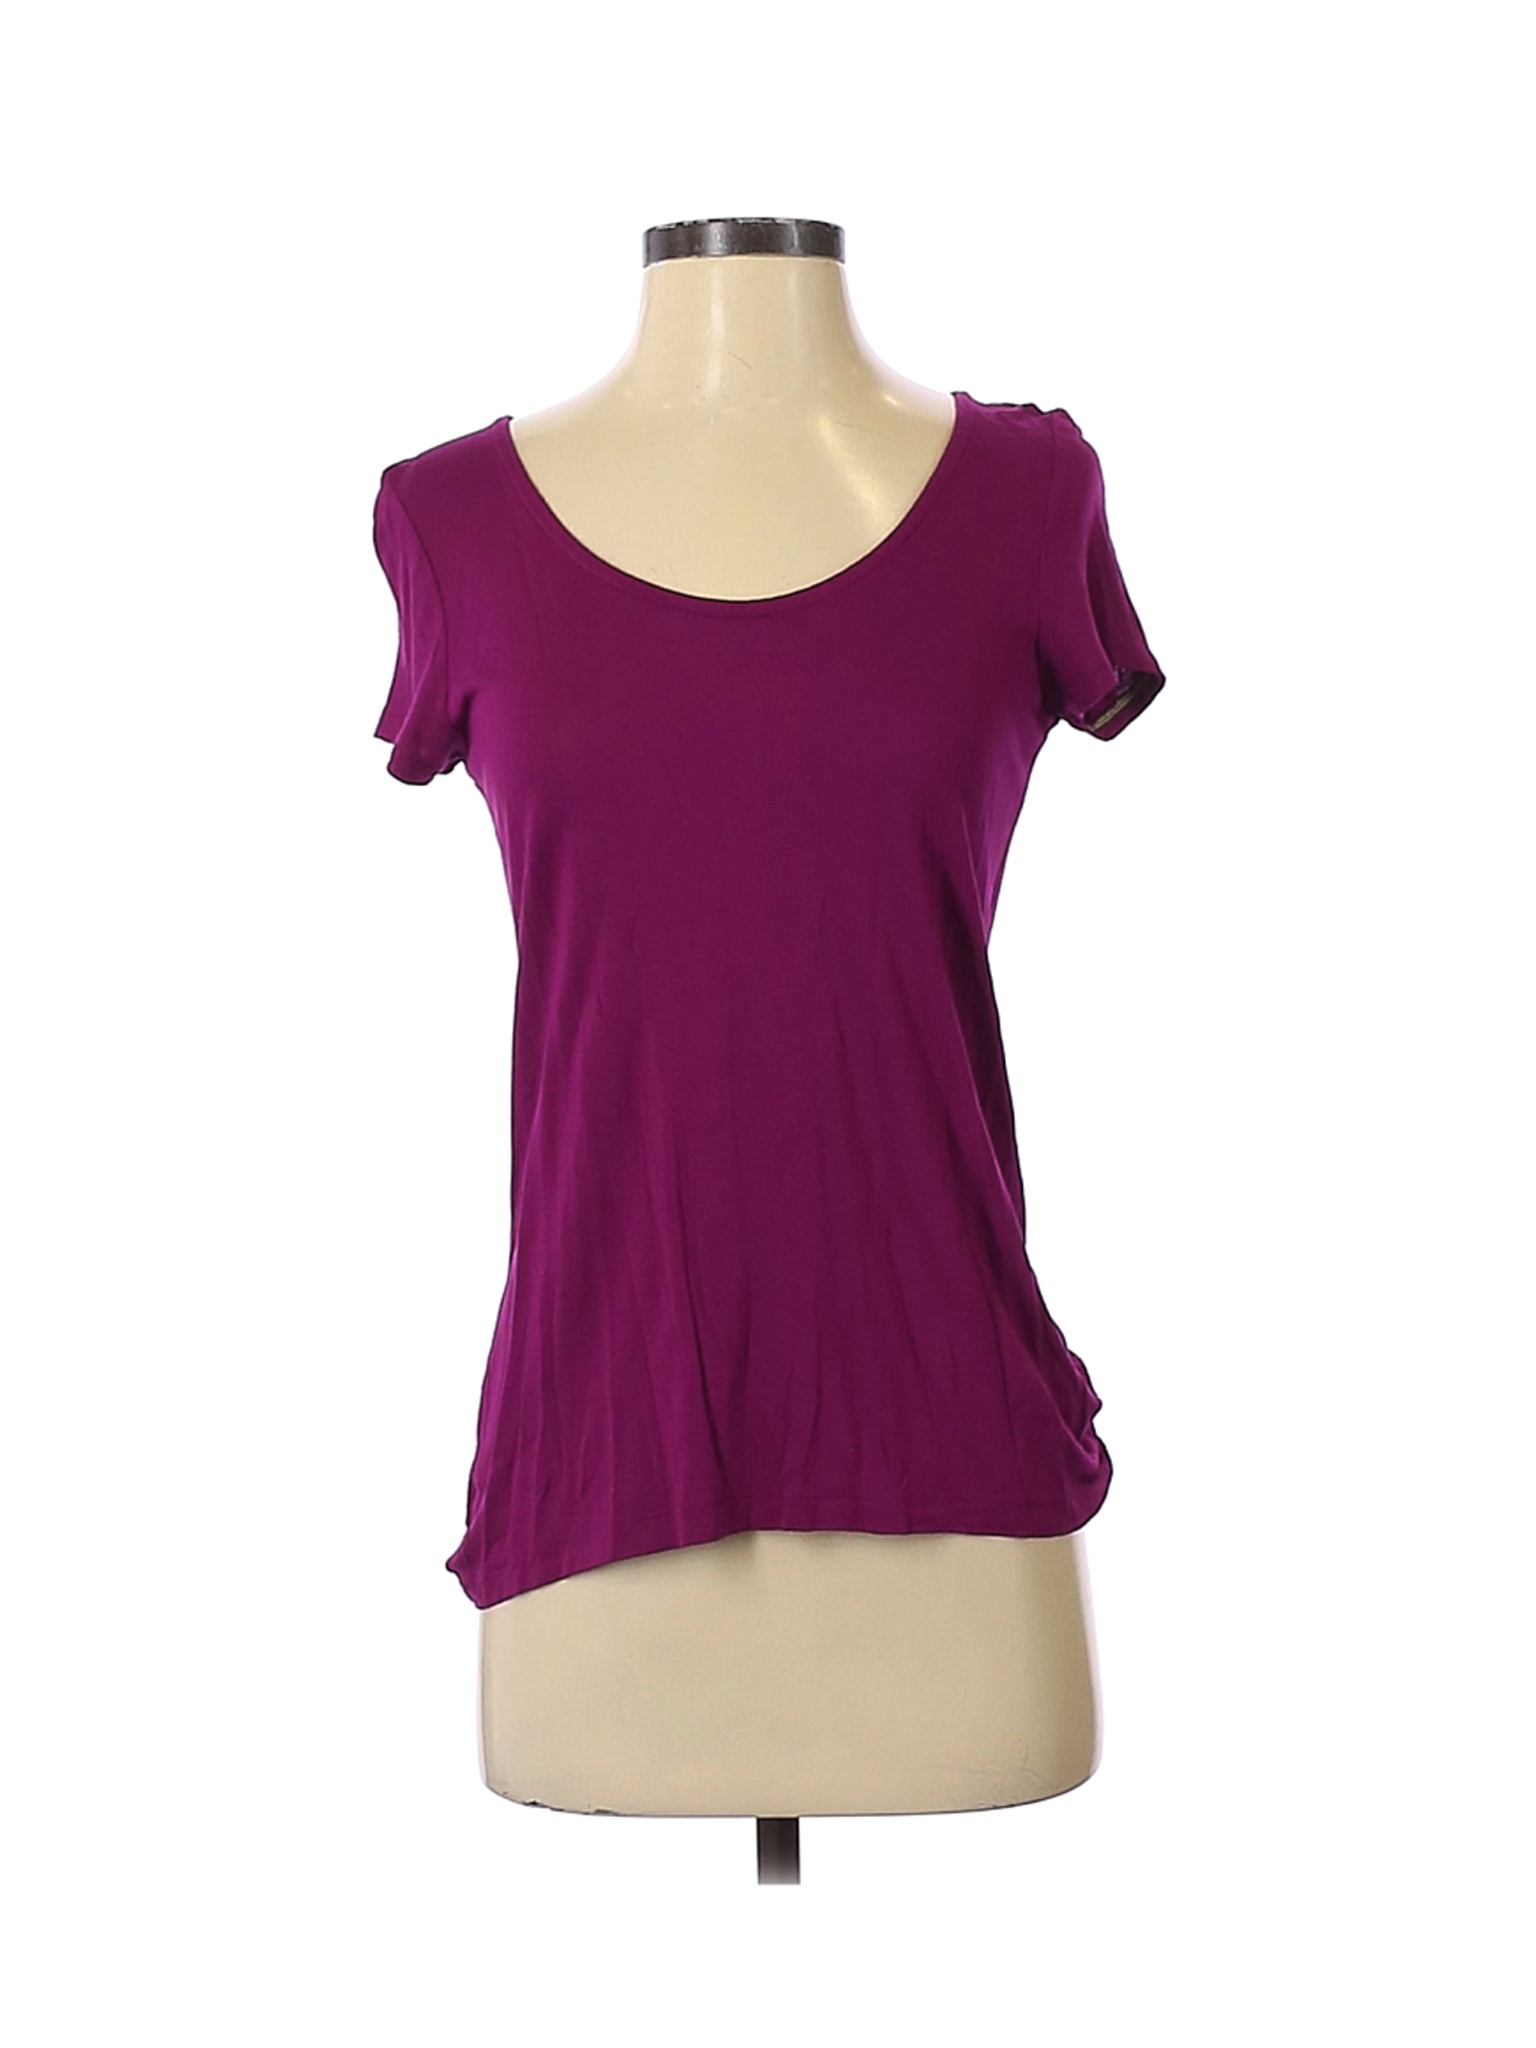 A.n.a. A New Approach Women Purple Short Sleeve Top S | eBay